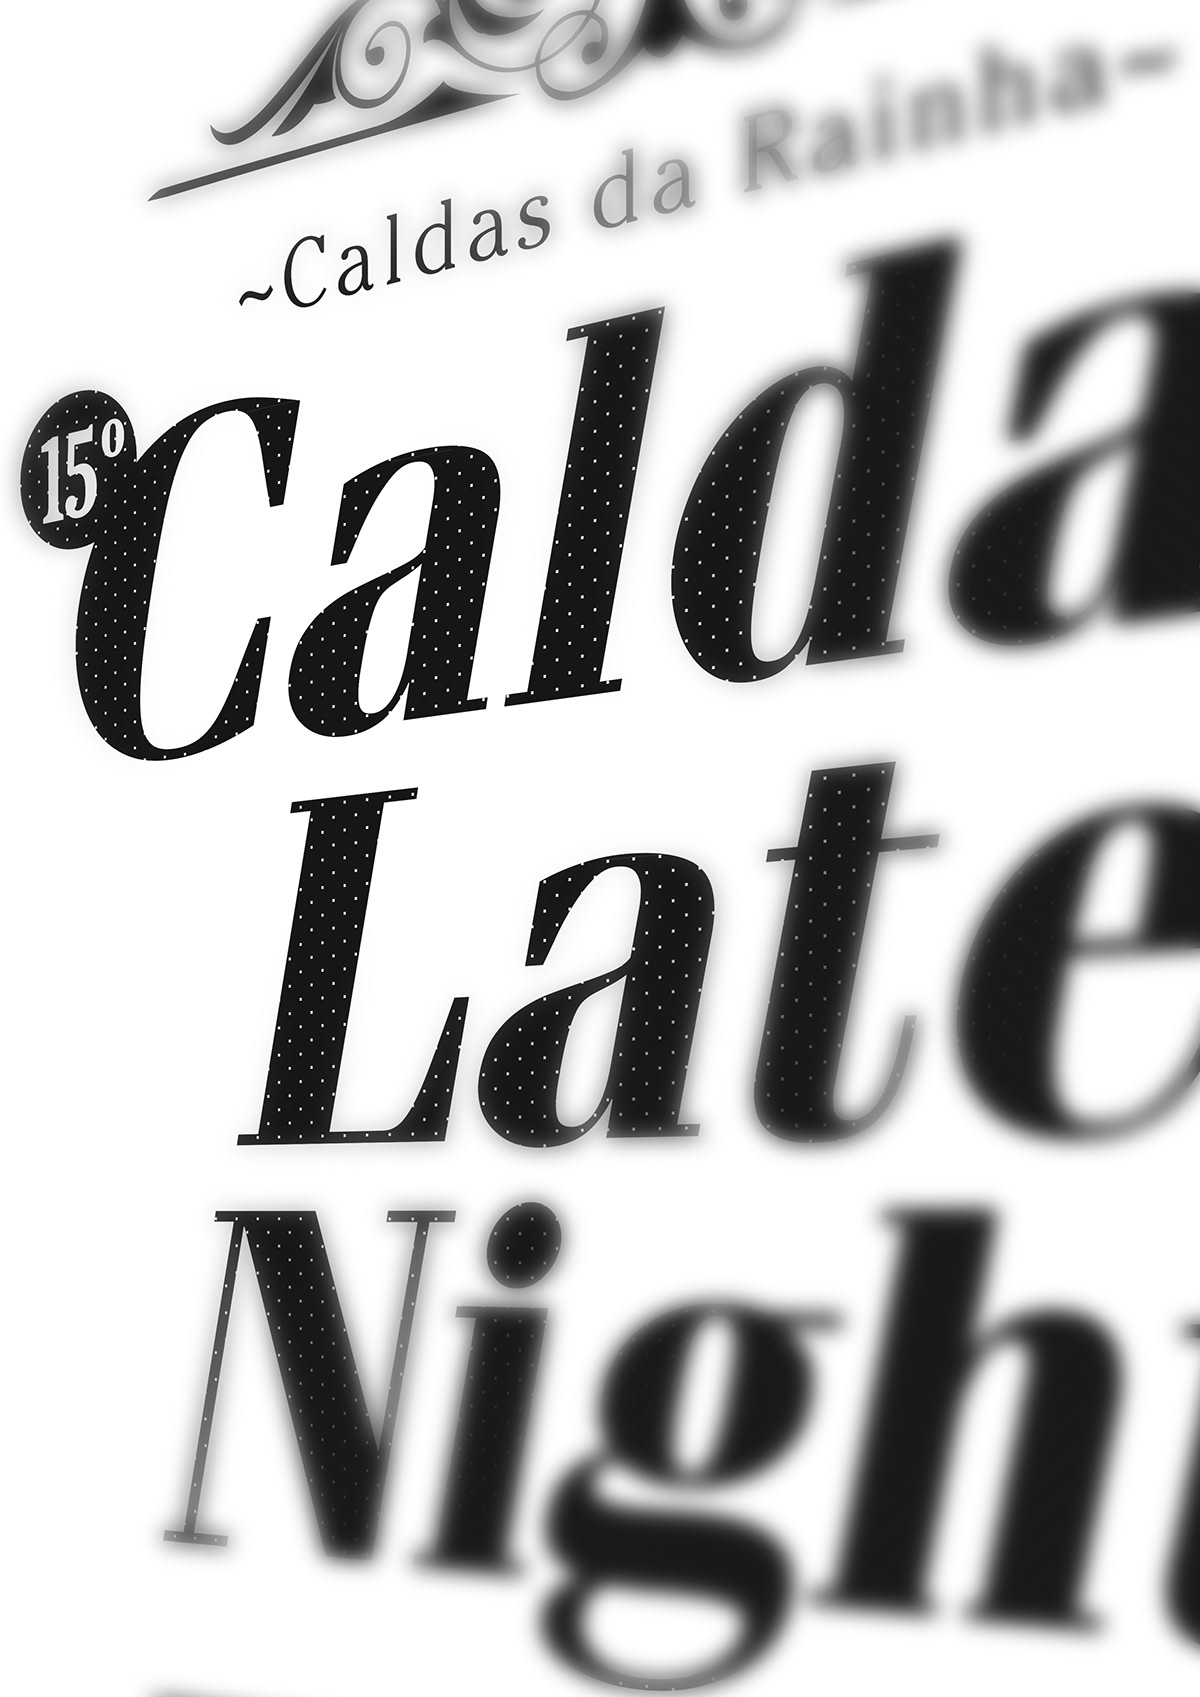 caldas late night poster type black White Black&white